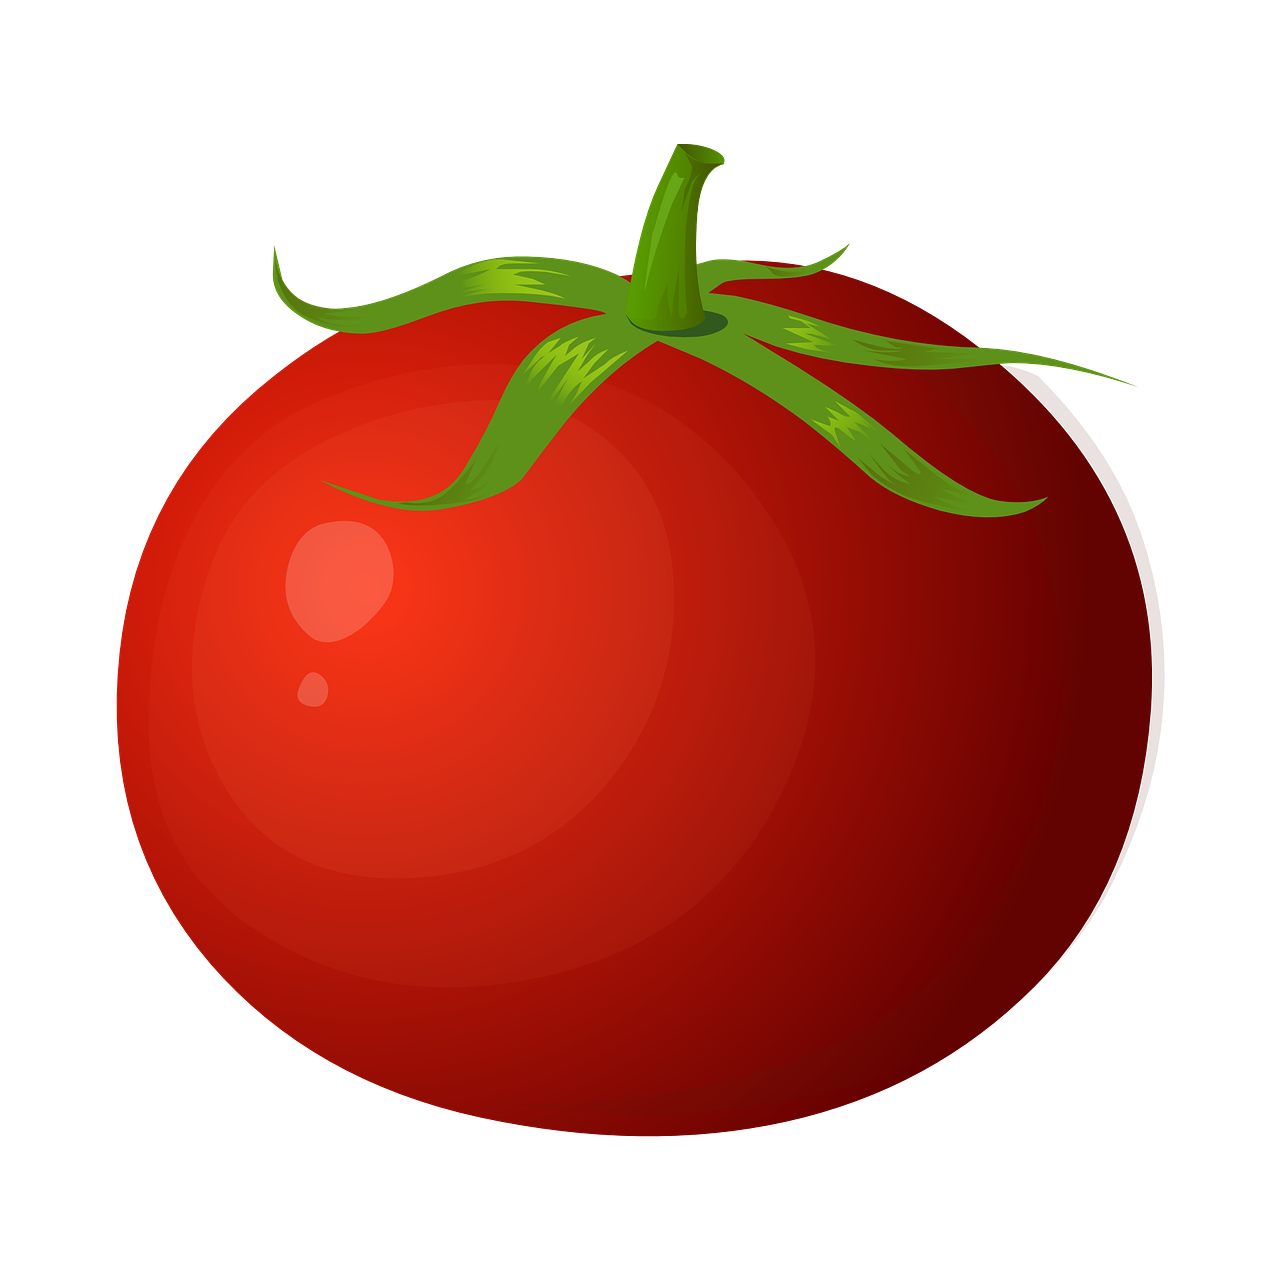 tomato red fruits free photo